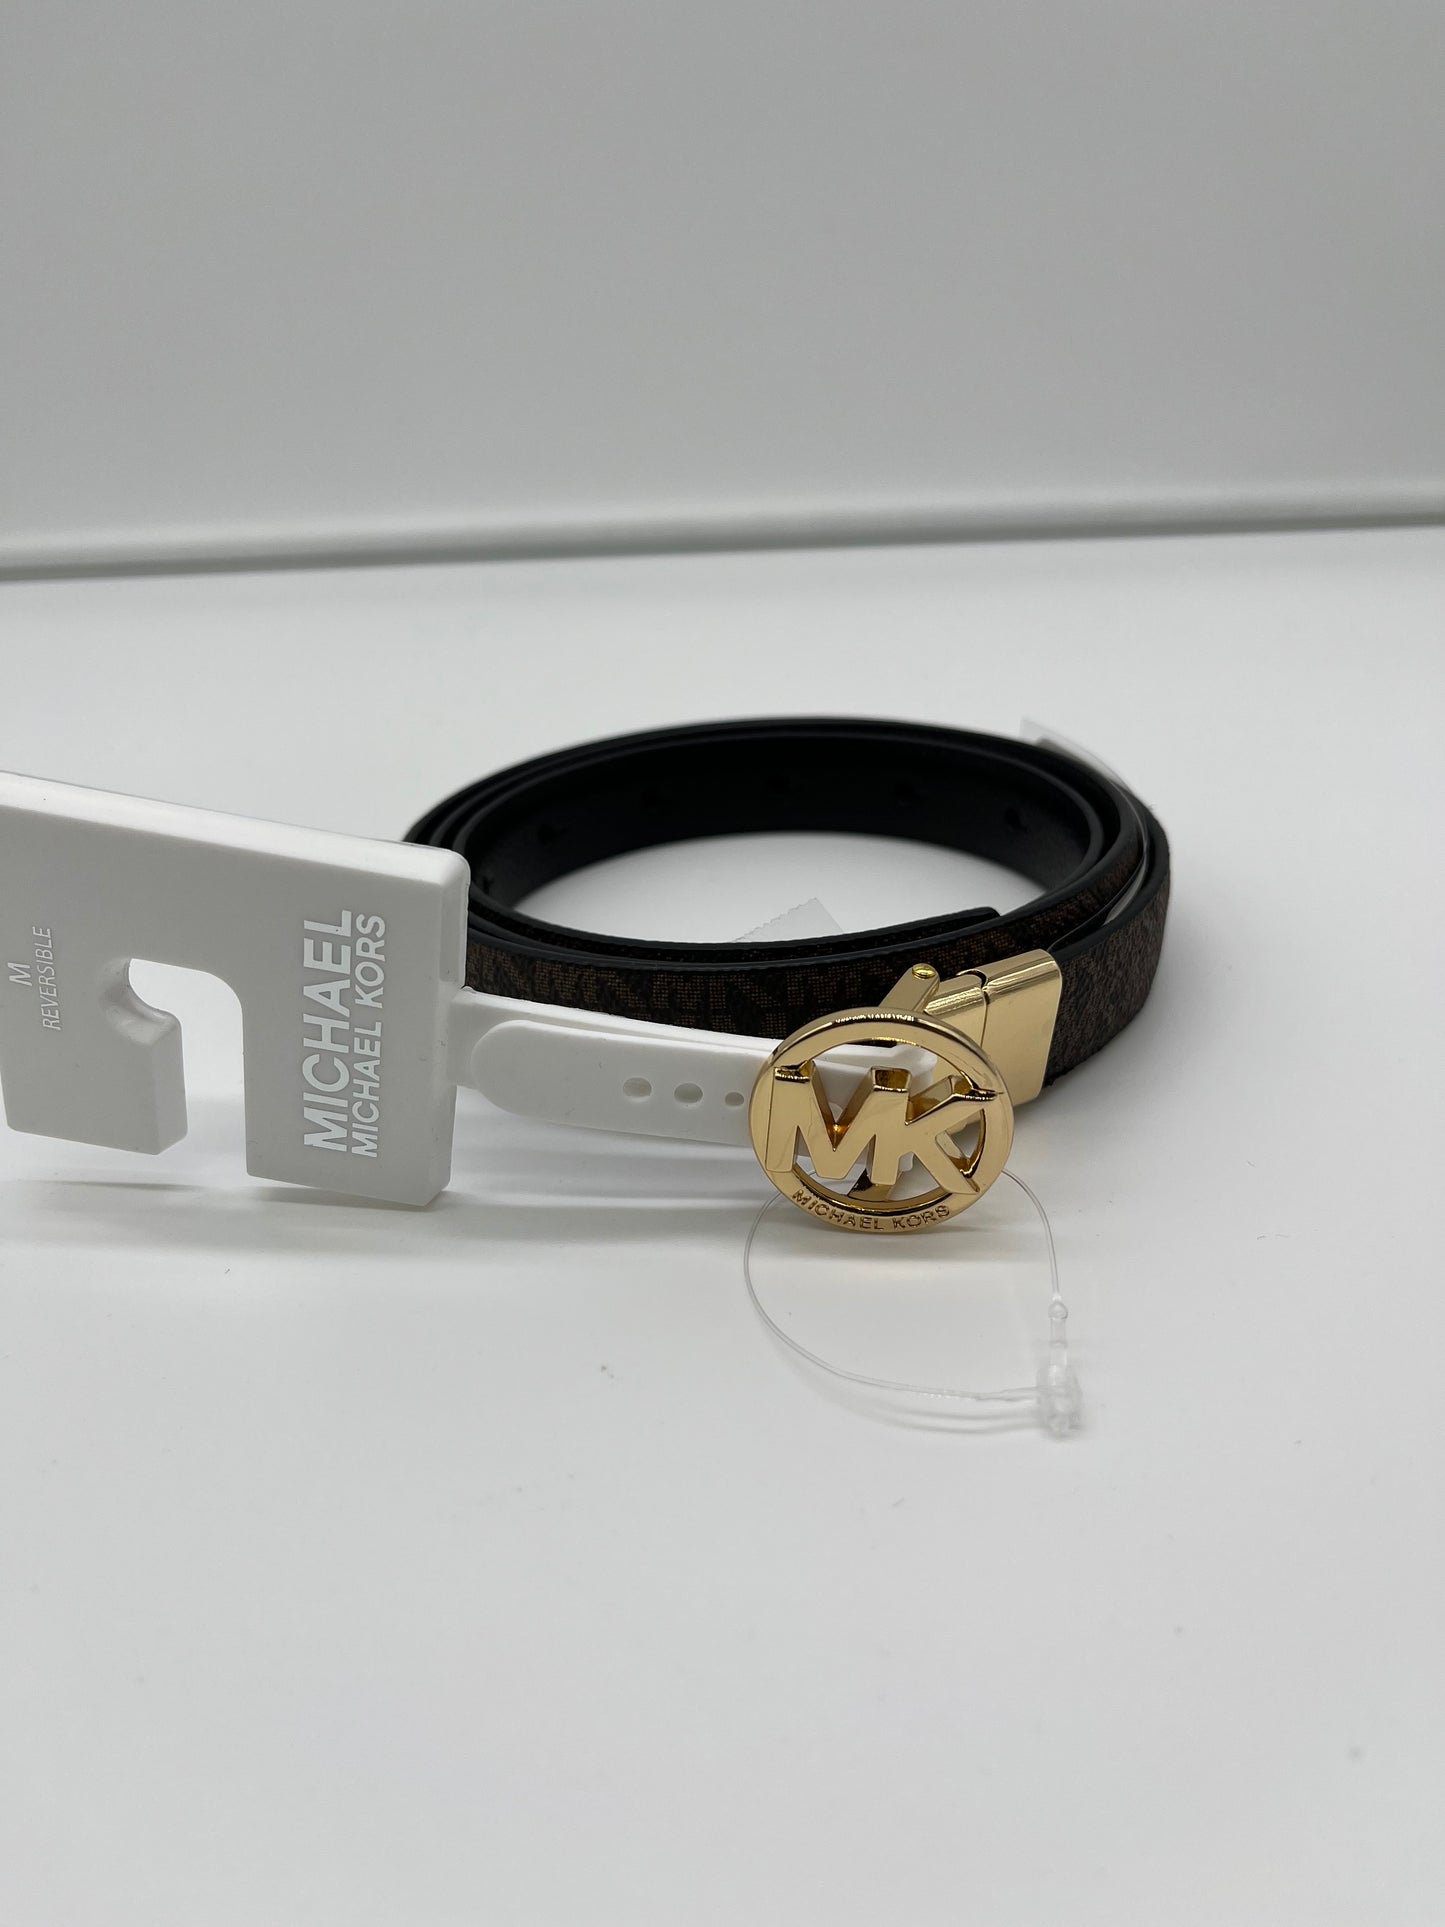 Michael Kors Reversible Ladies Belt (Medium)